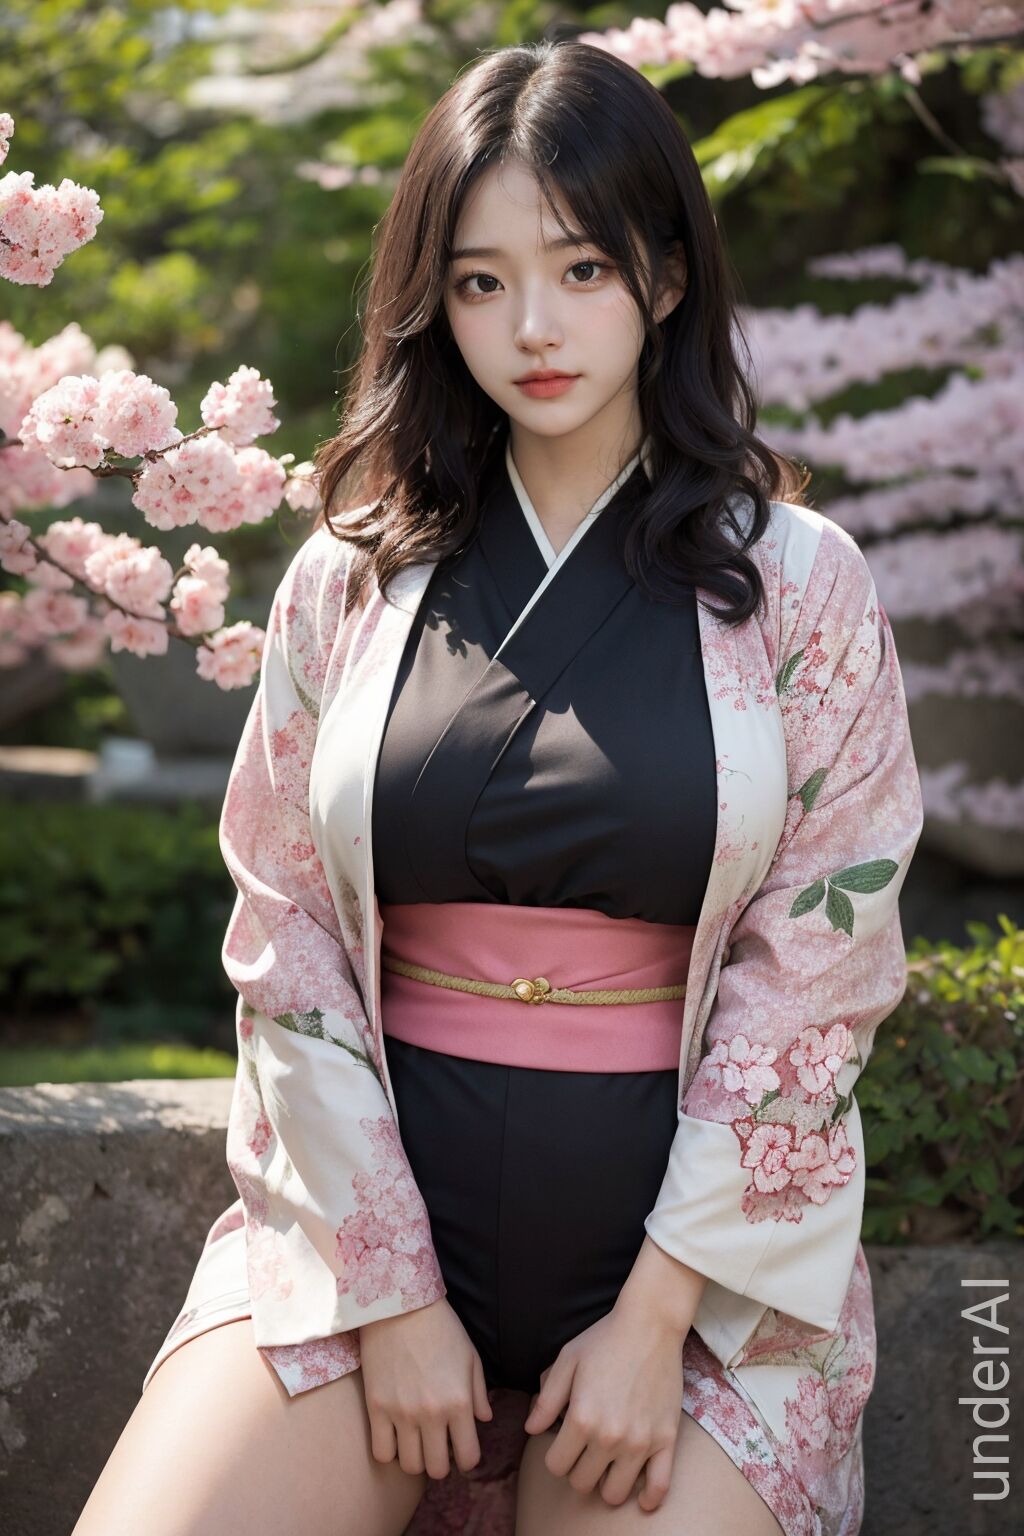 kimono_cherry_blossom_festival1_108834662_p2.jpg